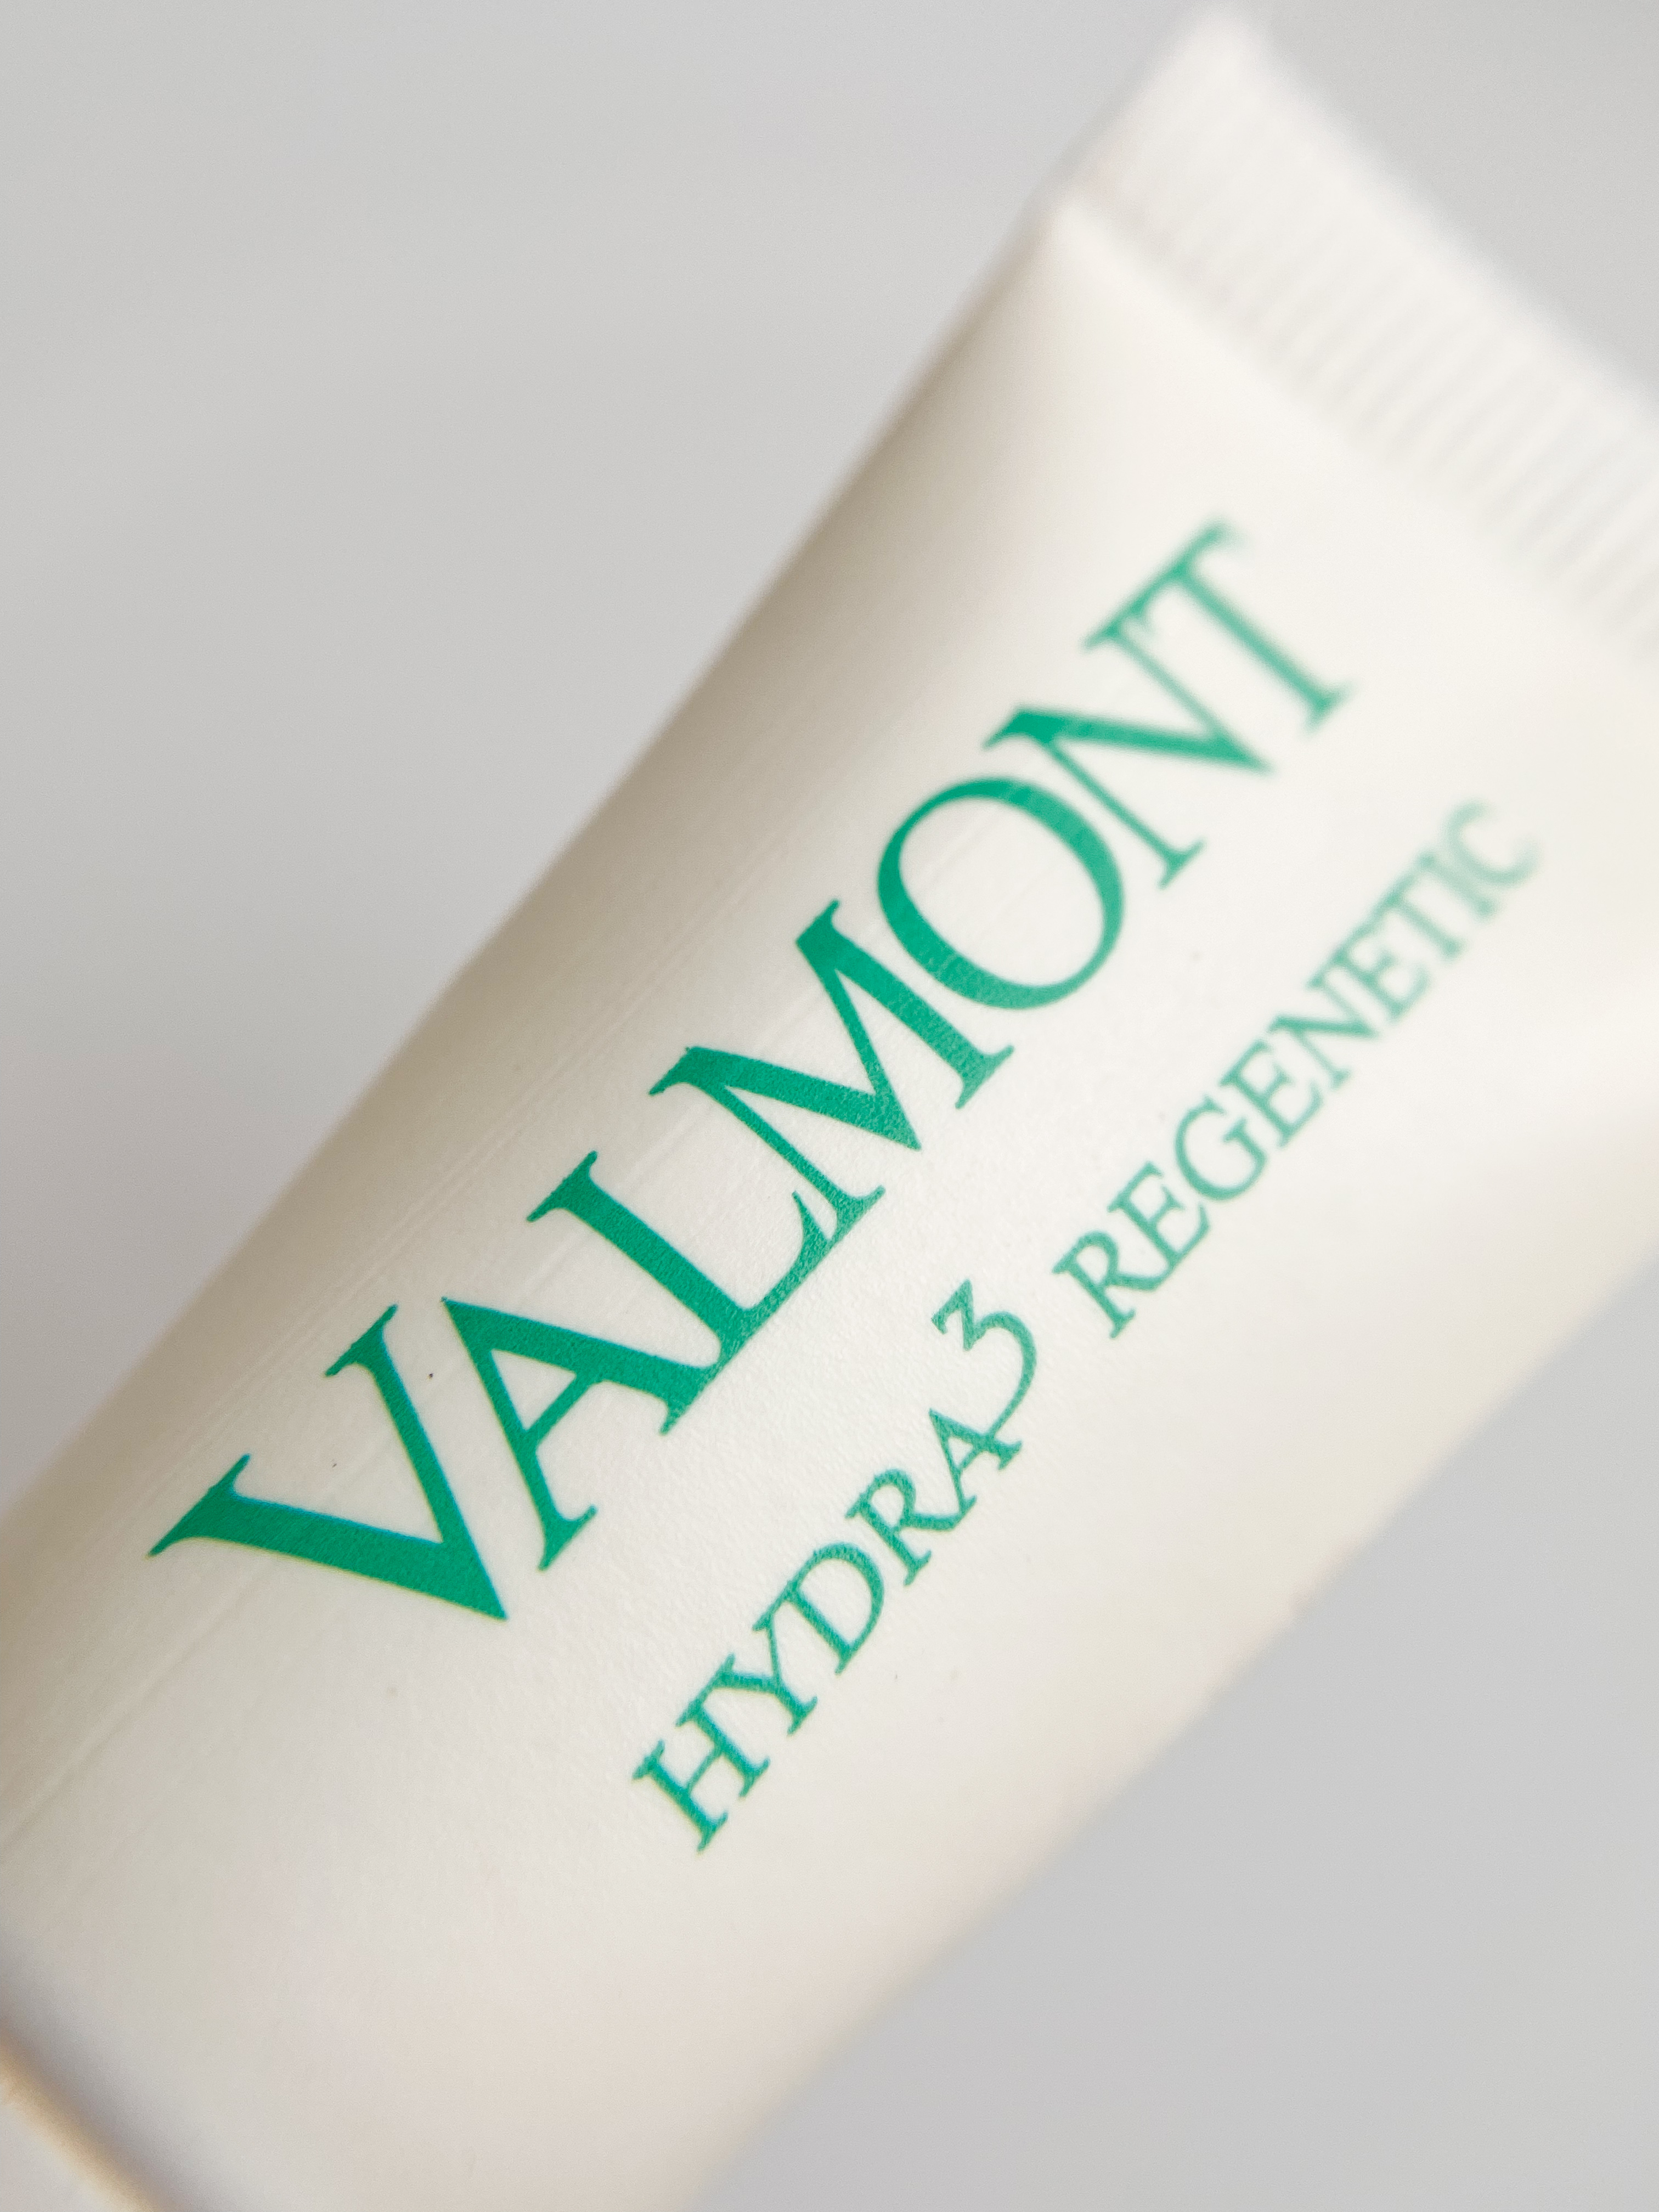 Valmont Hydra3 Regenetic Cream